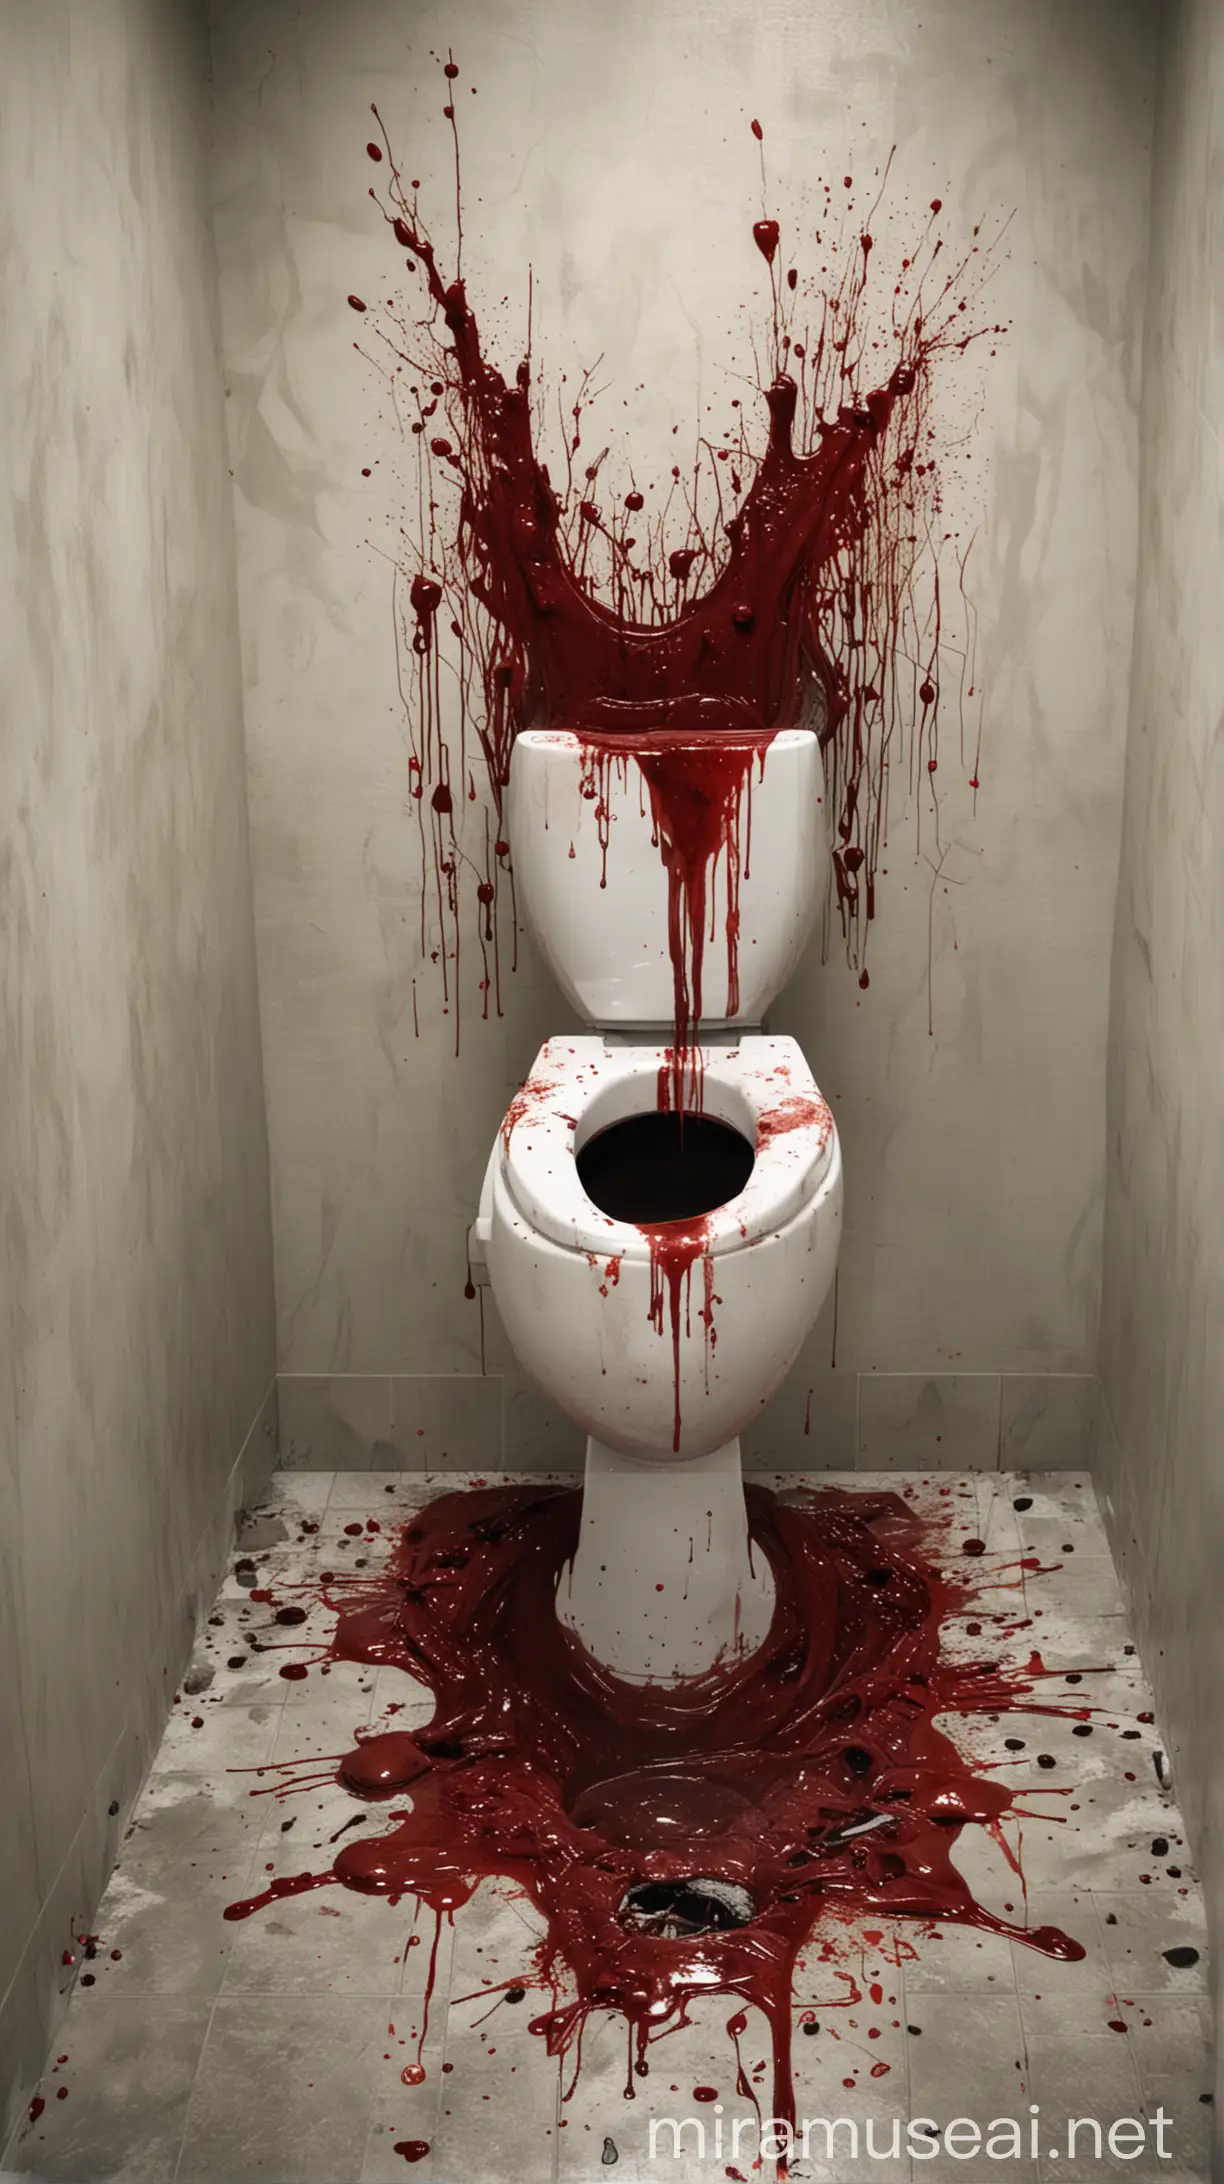 Creepy Horror Scene Eerie and Bloody Toilet